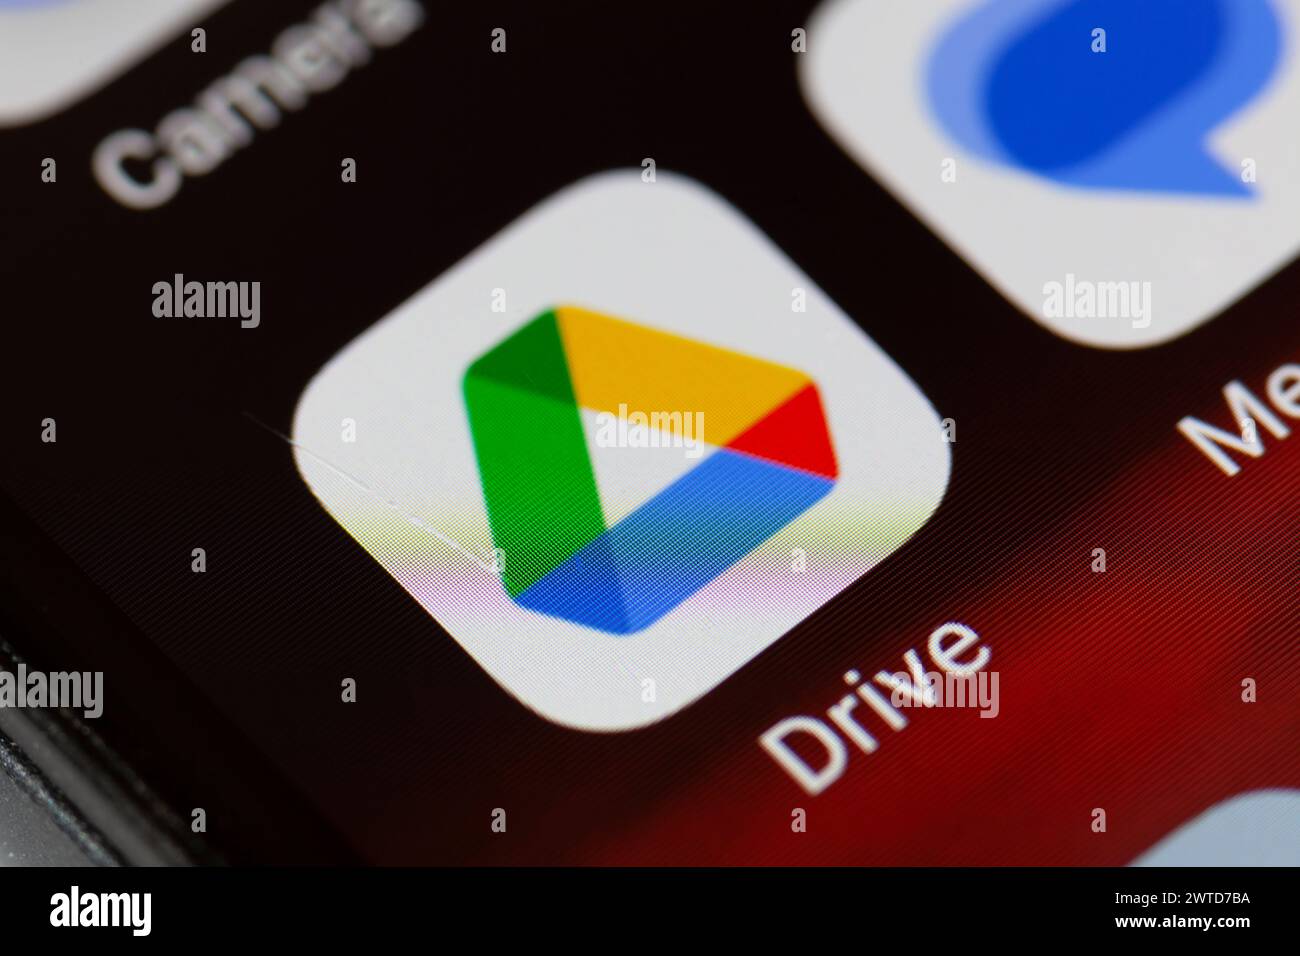 Google Drive app icon on mobile phone Stock Photo